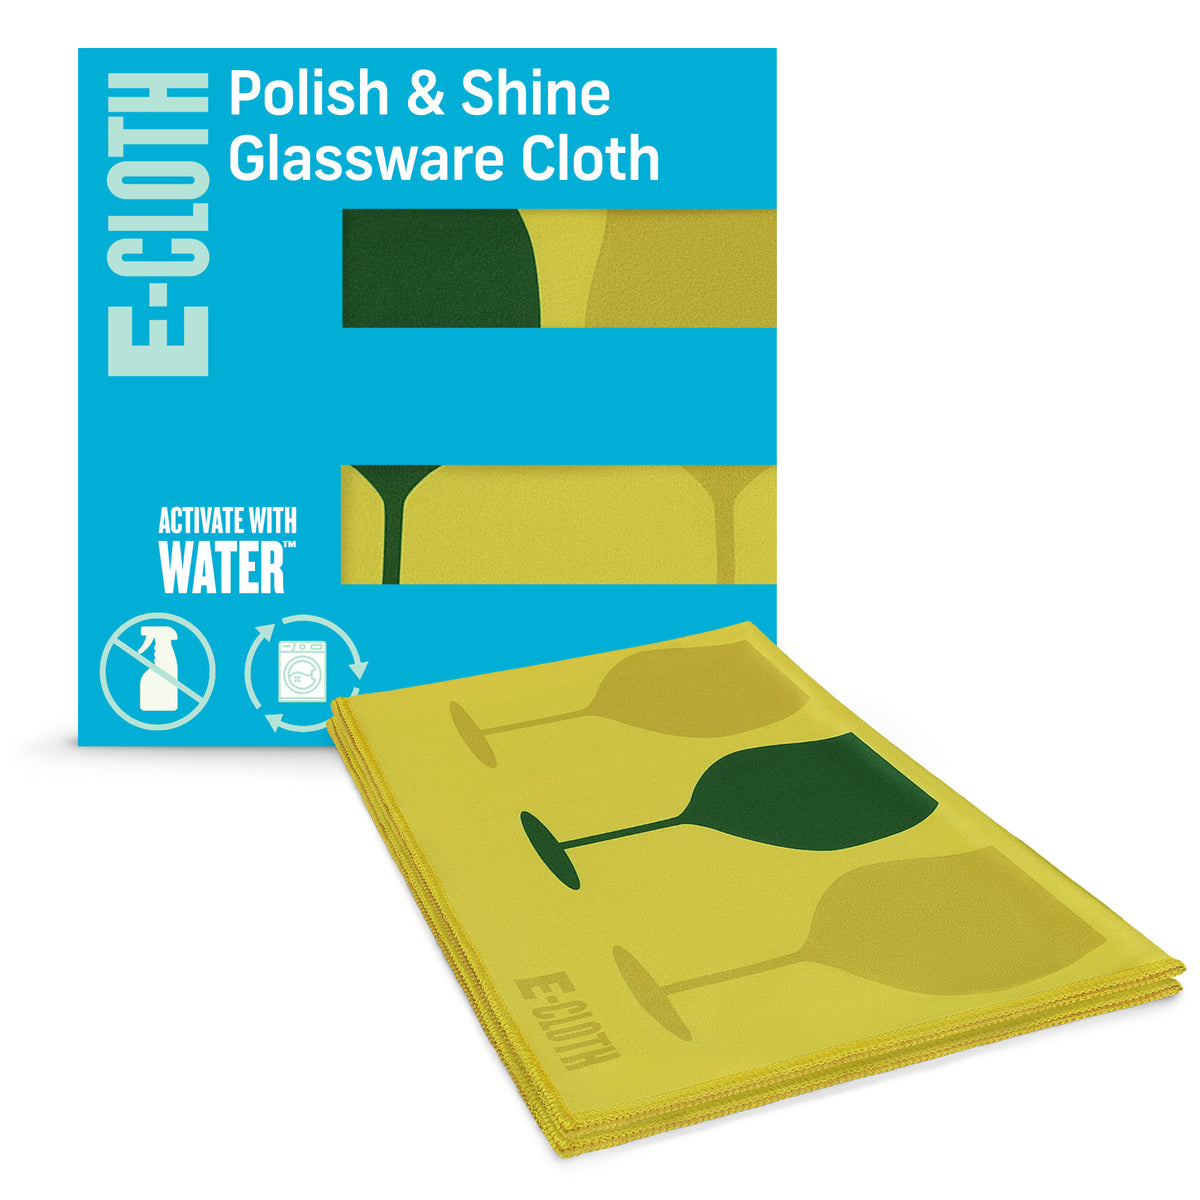 Polish and Shine Glassware Cloth